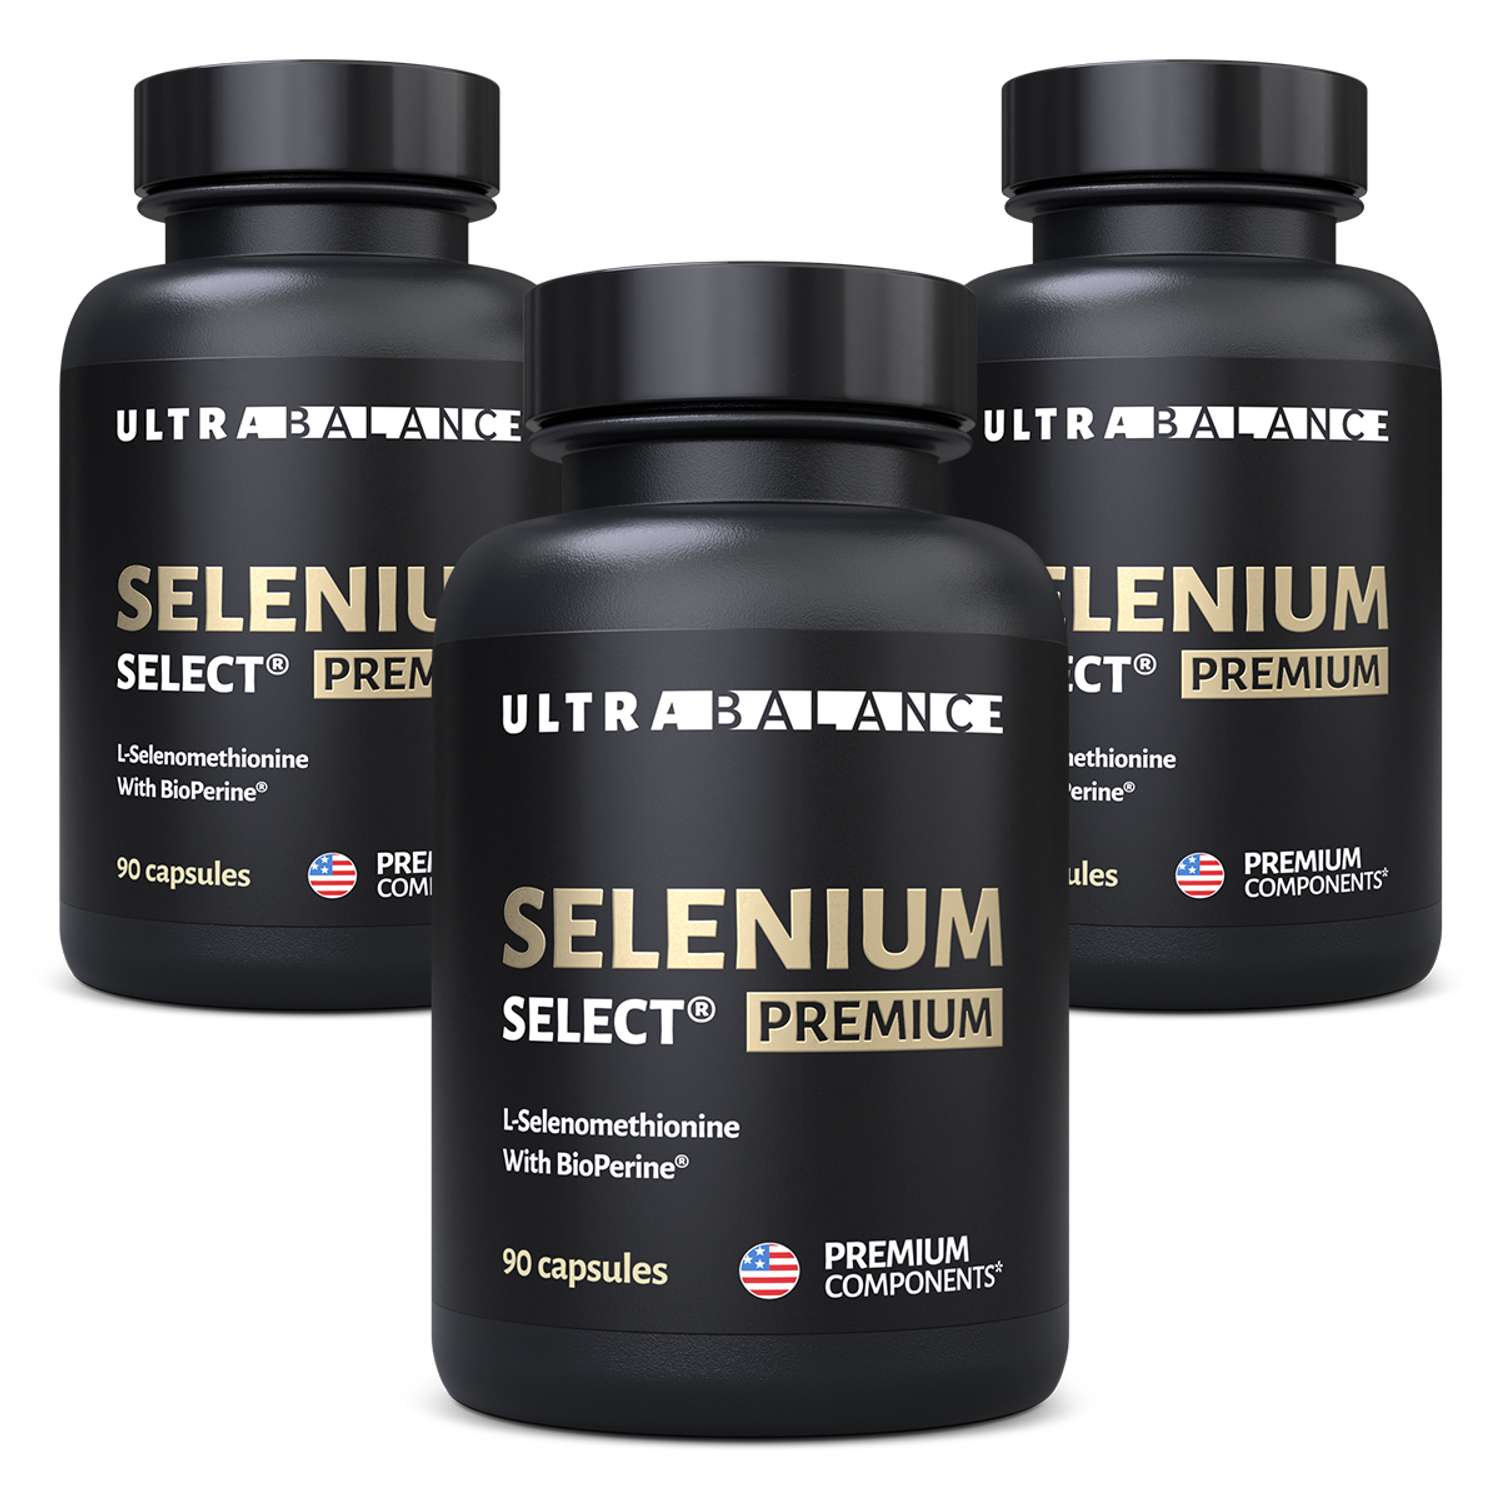 Selenium selectors. ИММУНОКОМПЛЕКС. Selenium select Premium. Сок ИММУНОКОМПЛЕКС. ВКУСВИЛЛ ИММУНОКОМПЛЕКС.